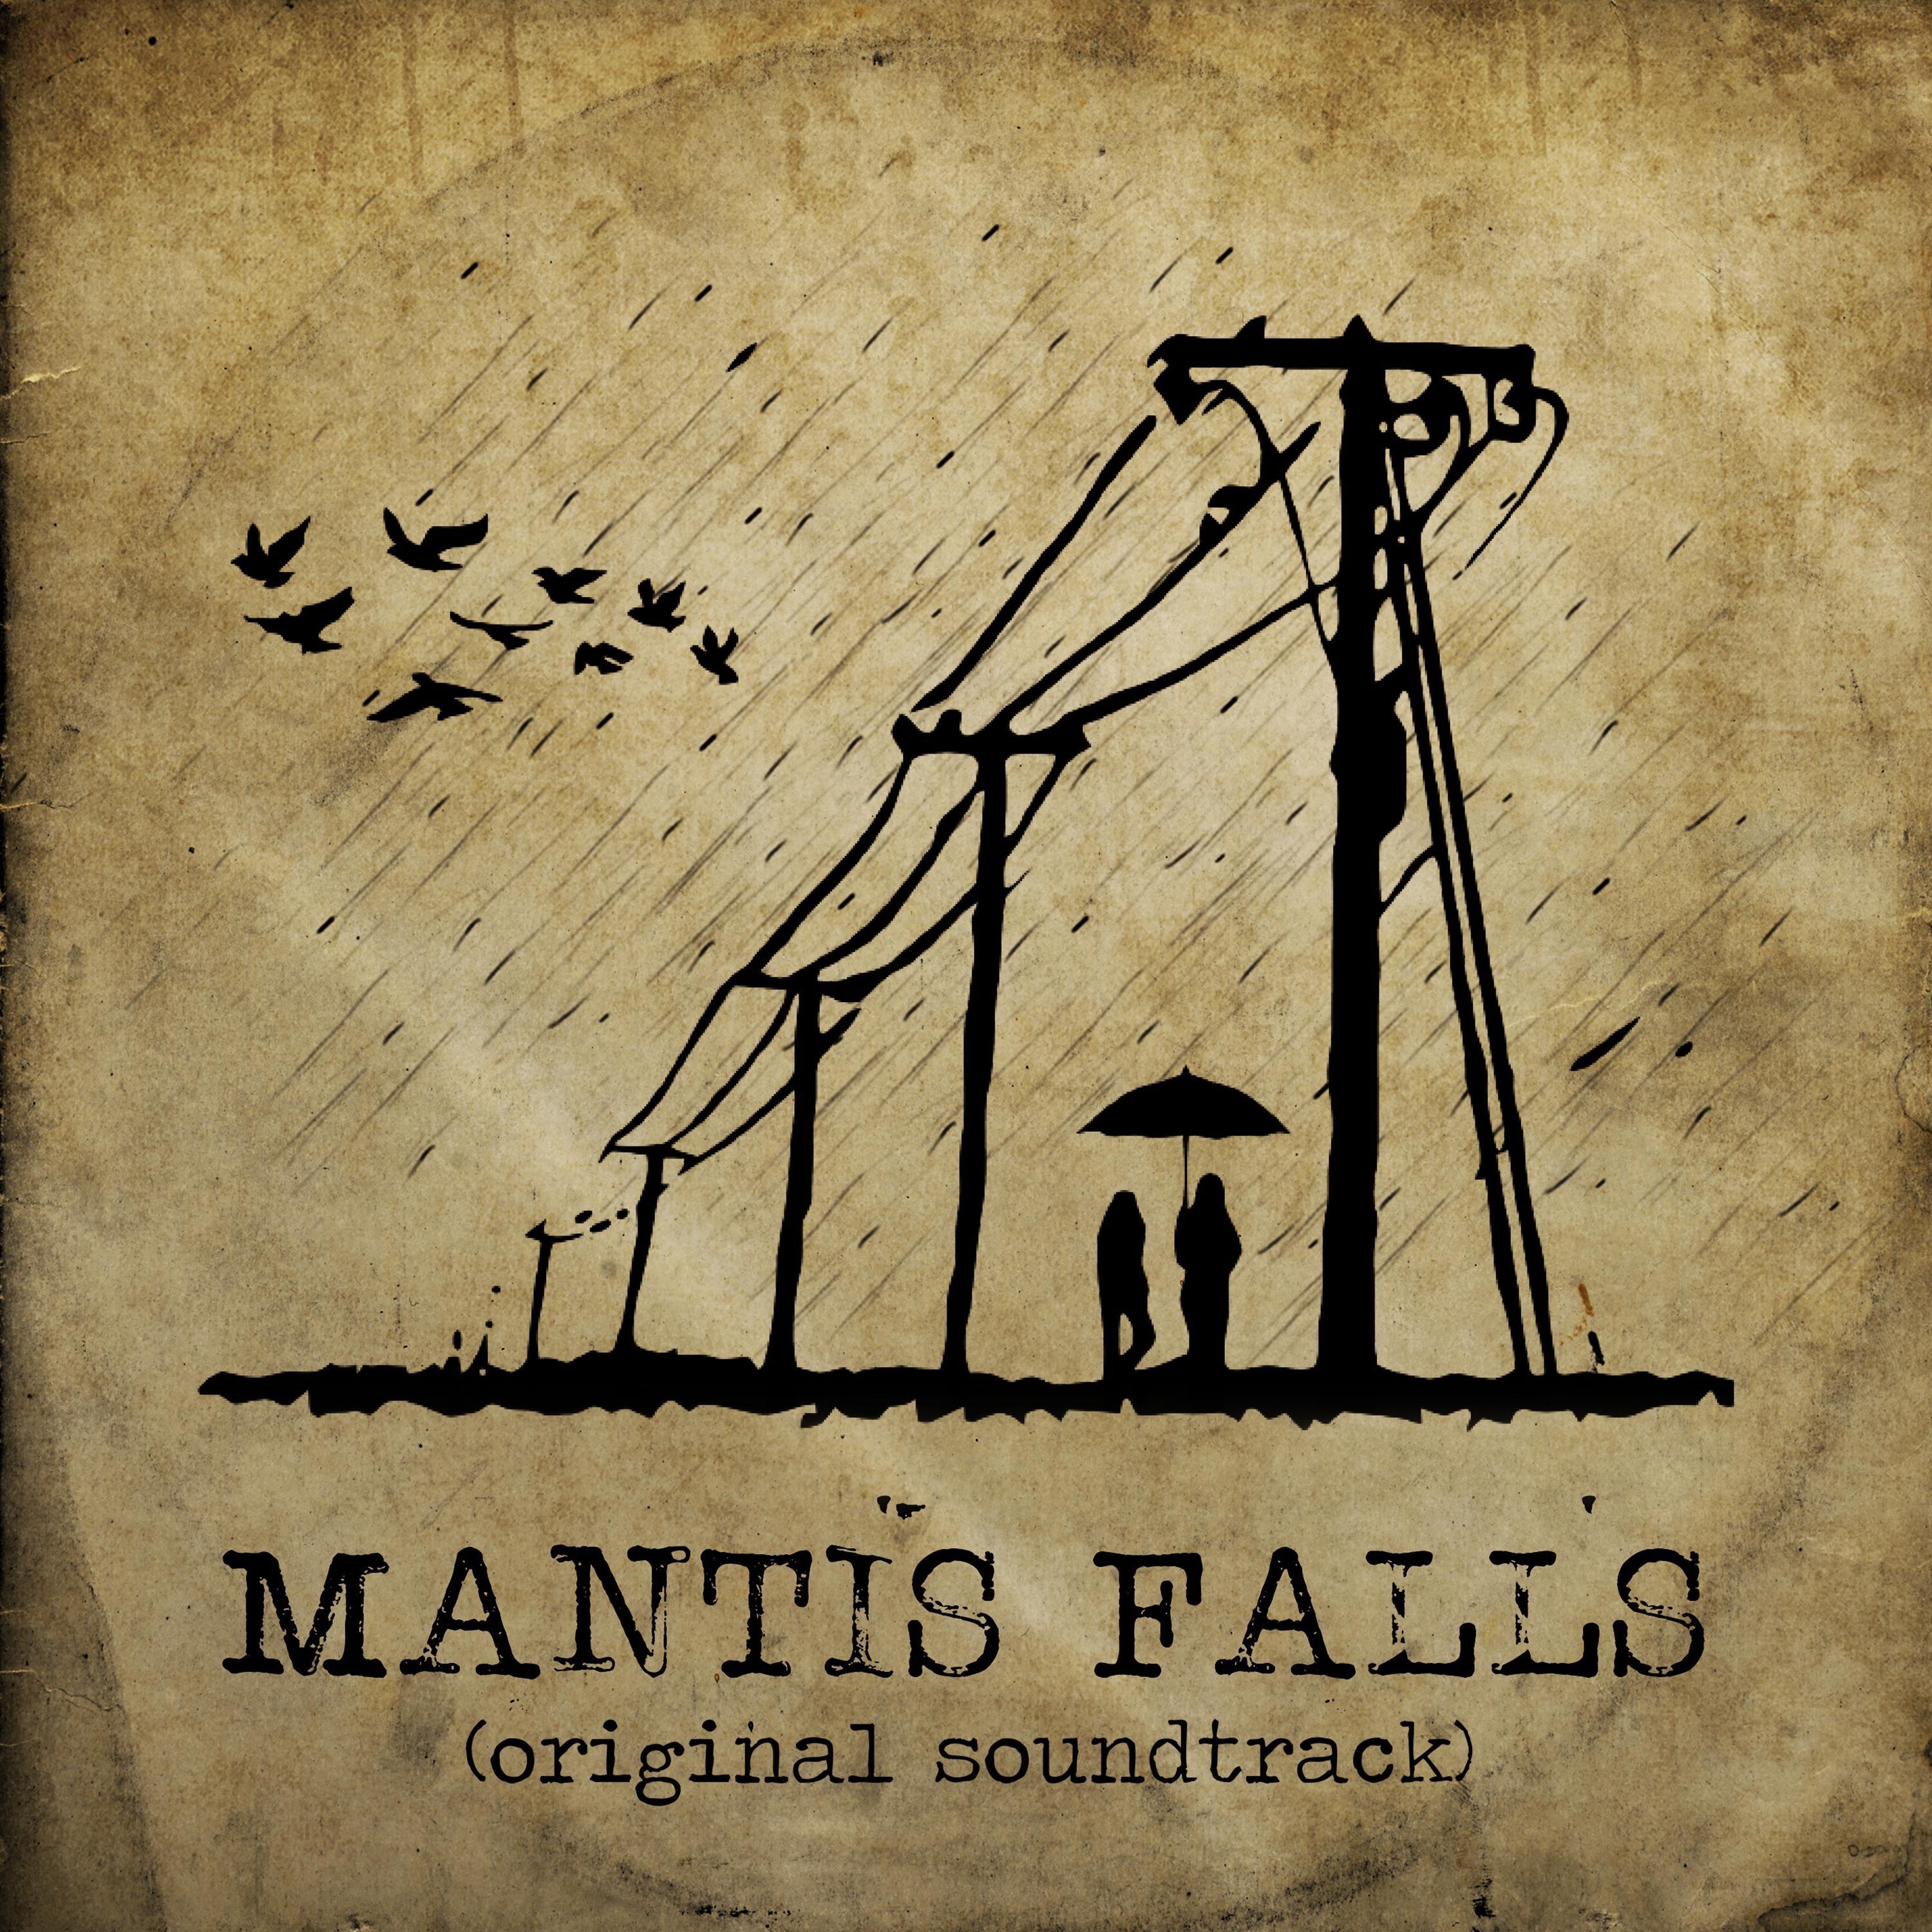 Mantis Soundtrack. Blue Mantis Soundtrack. Graffiti Falls OST Soundtrack. Fallen soundtrack